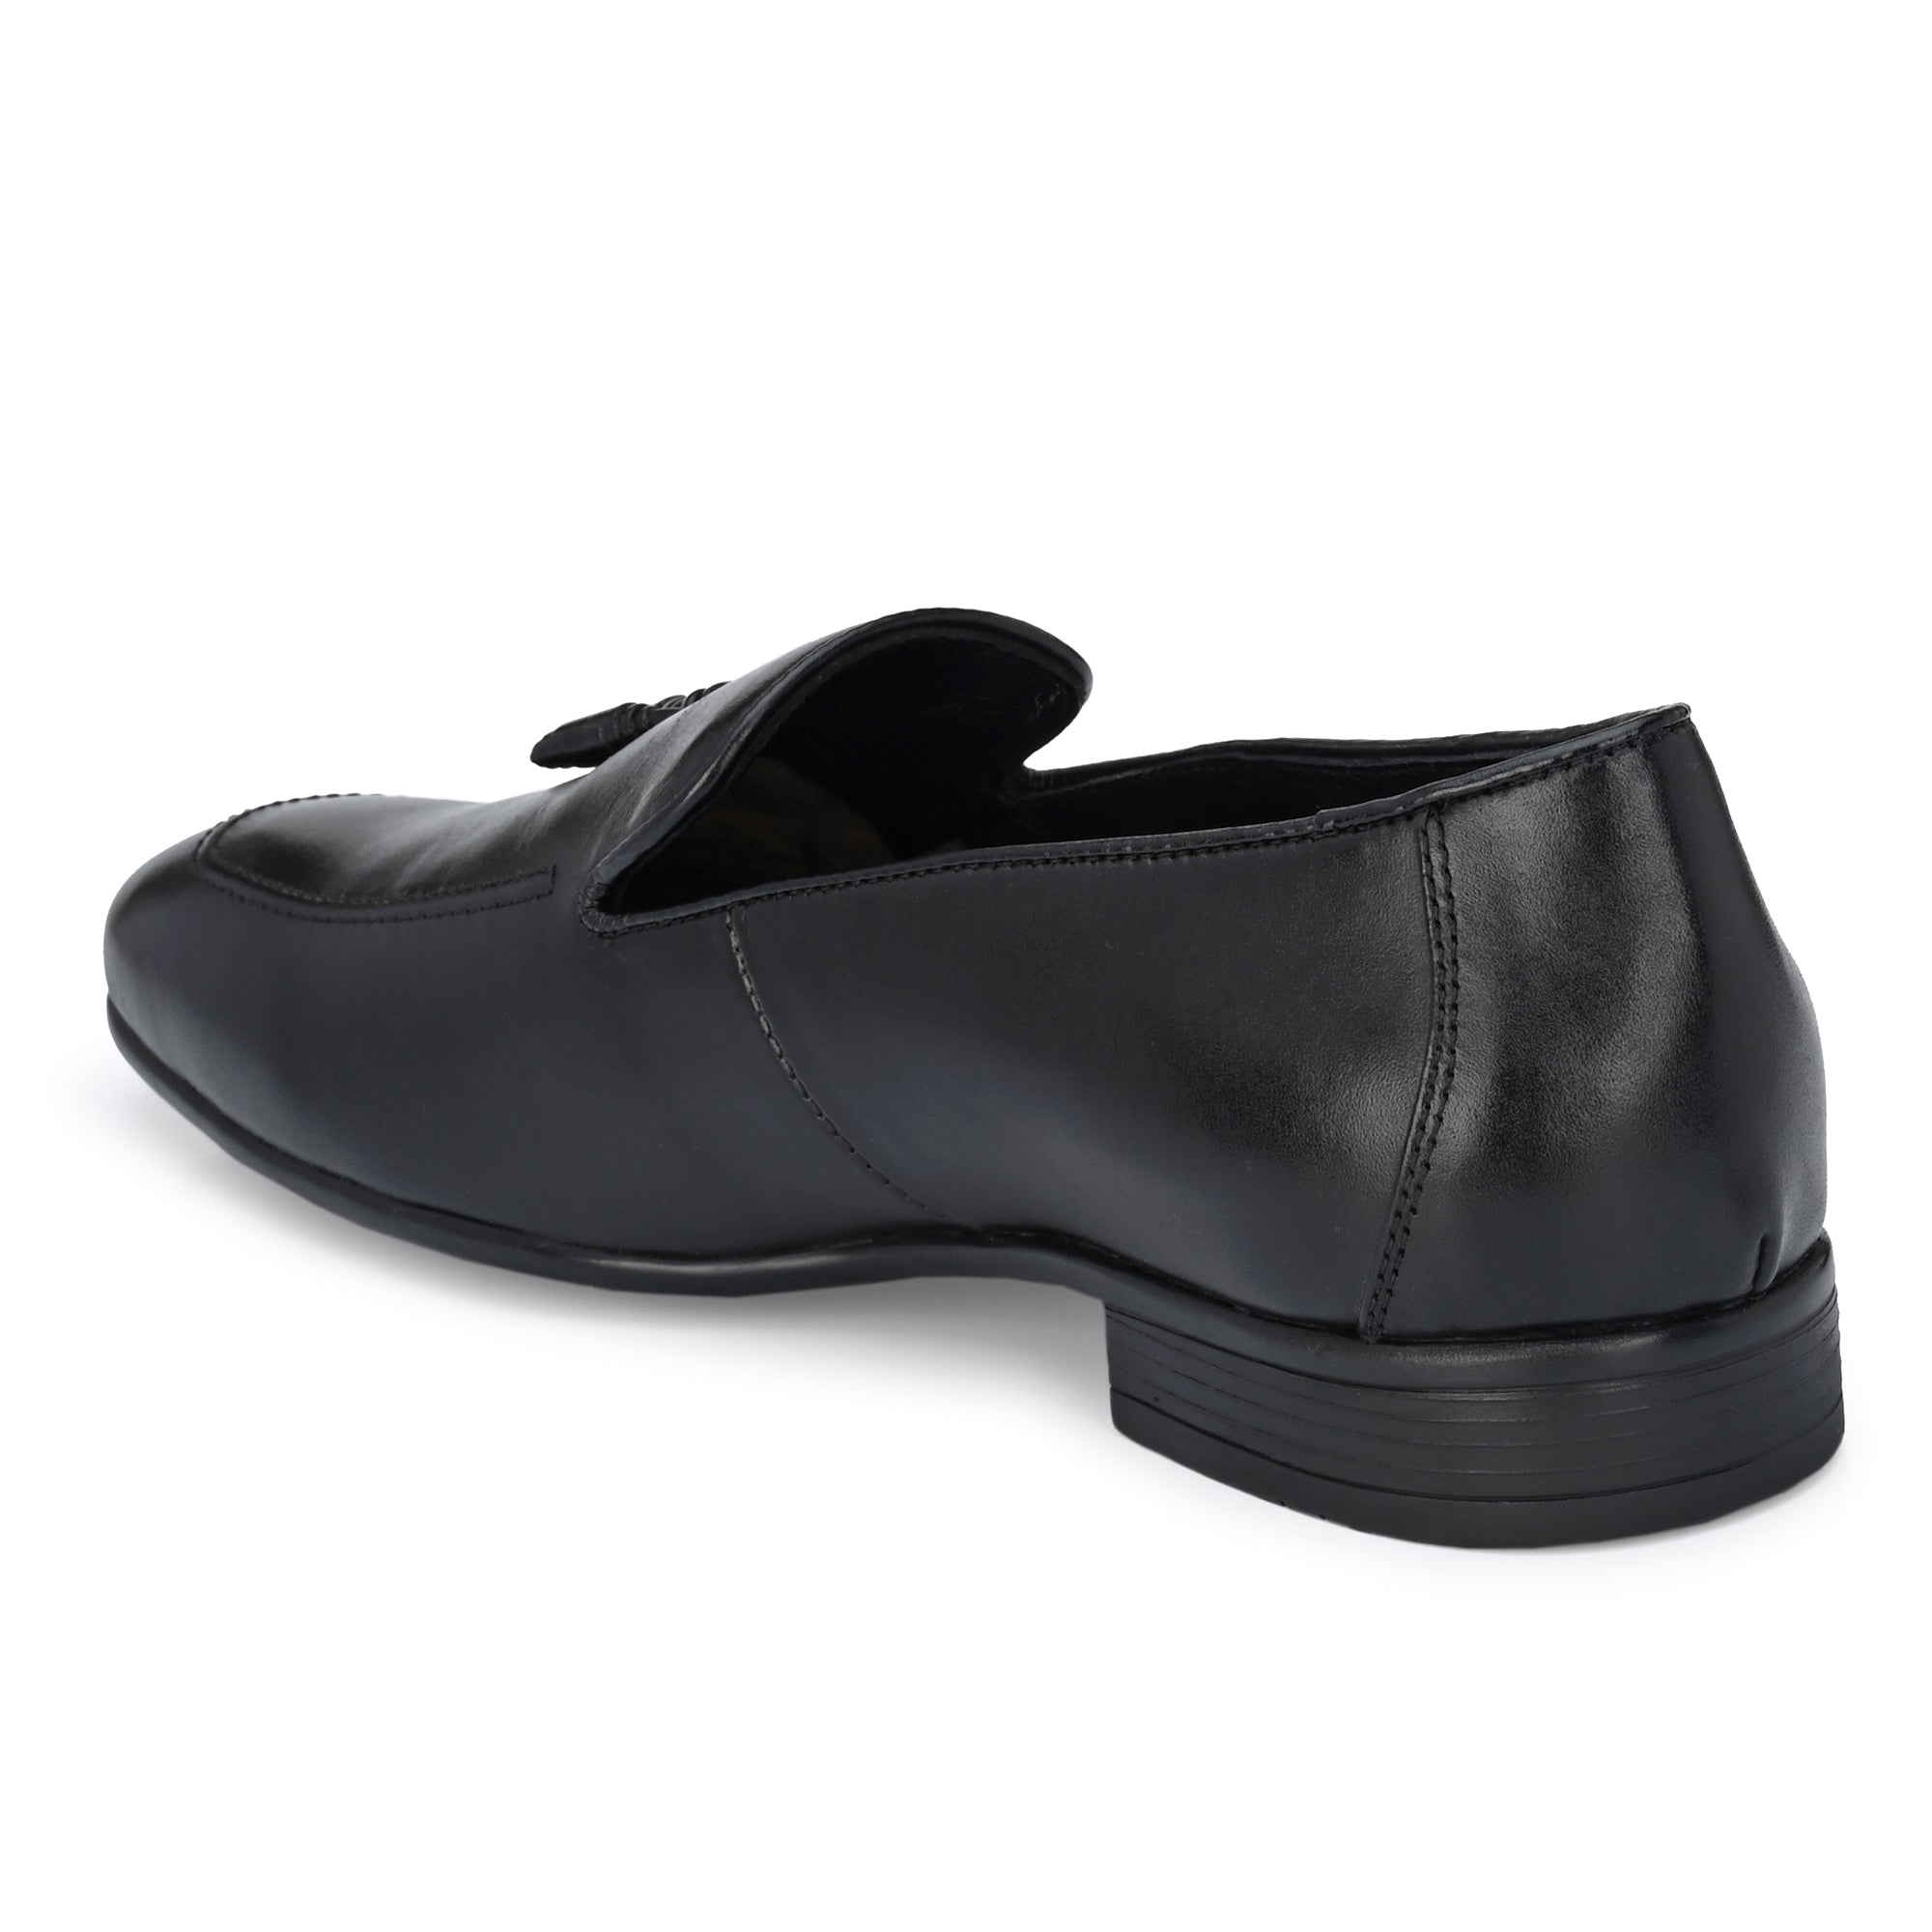 Egoss Formal Tassel Loafers For Men - Formal Loafers for Men